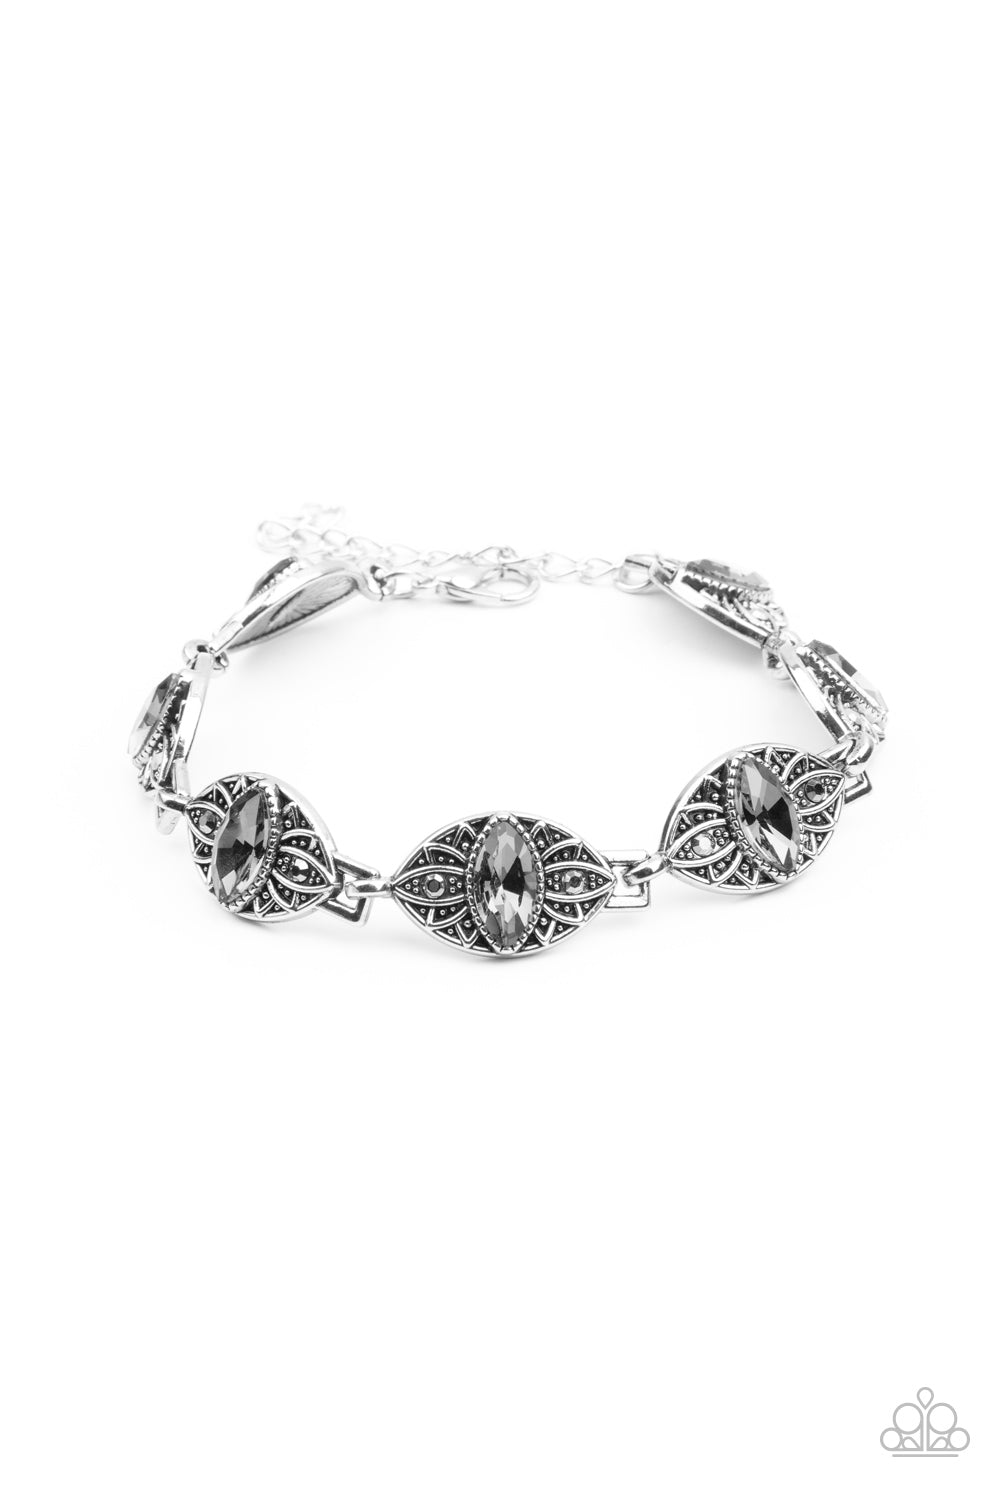 Crown Privilege - Silver Bracelet - Princess Glam Shop